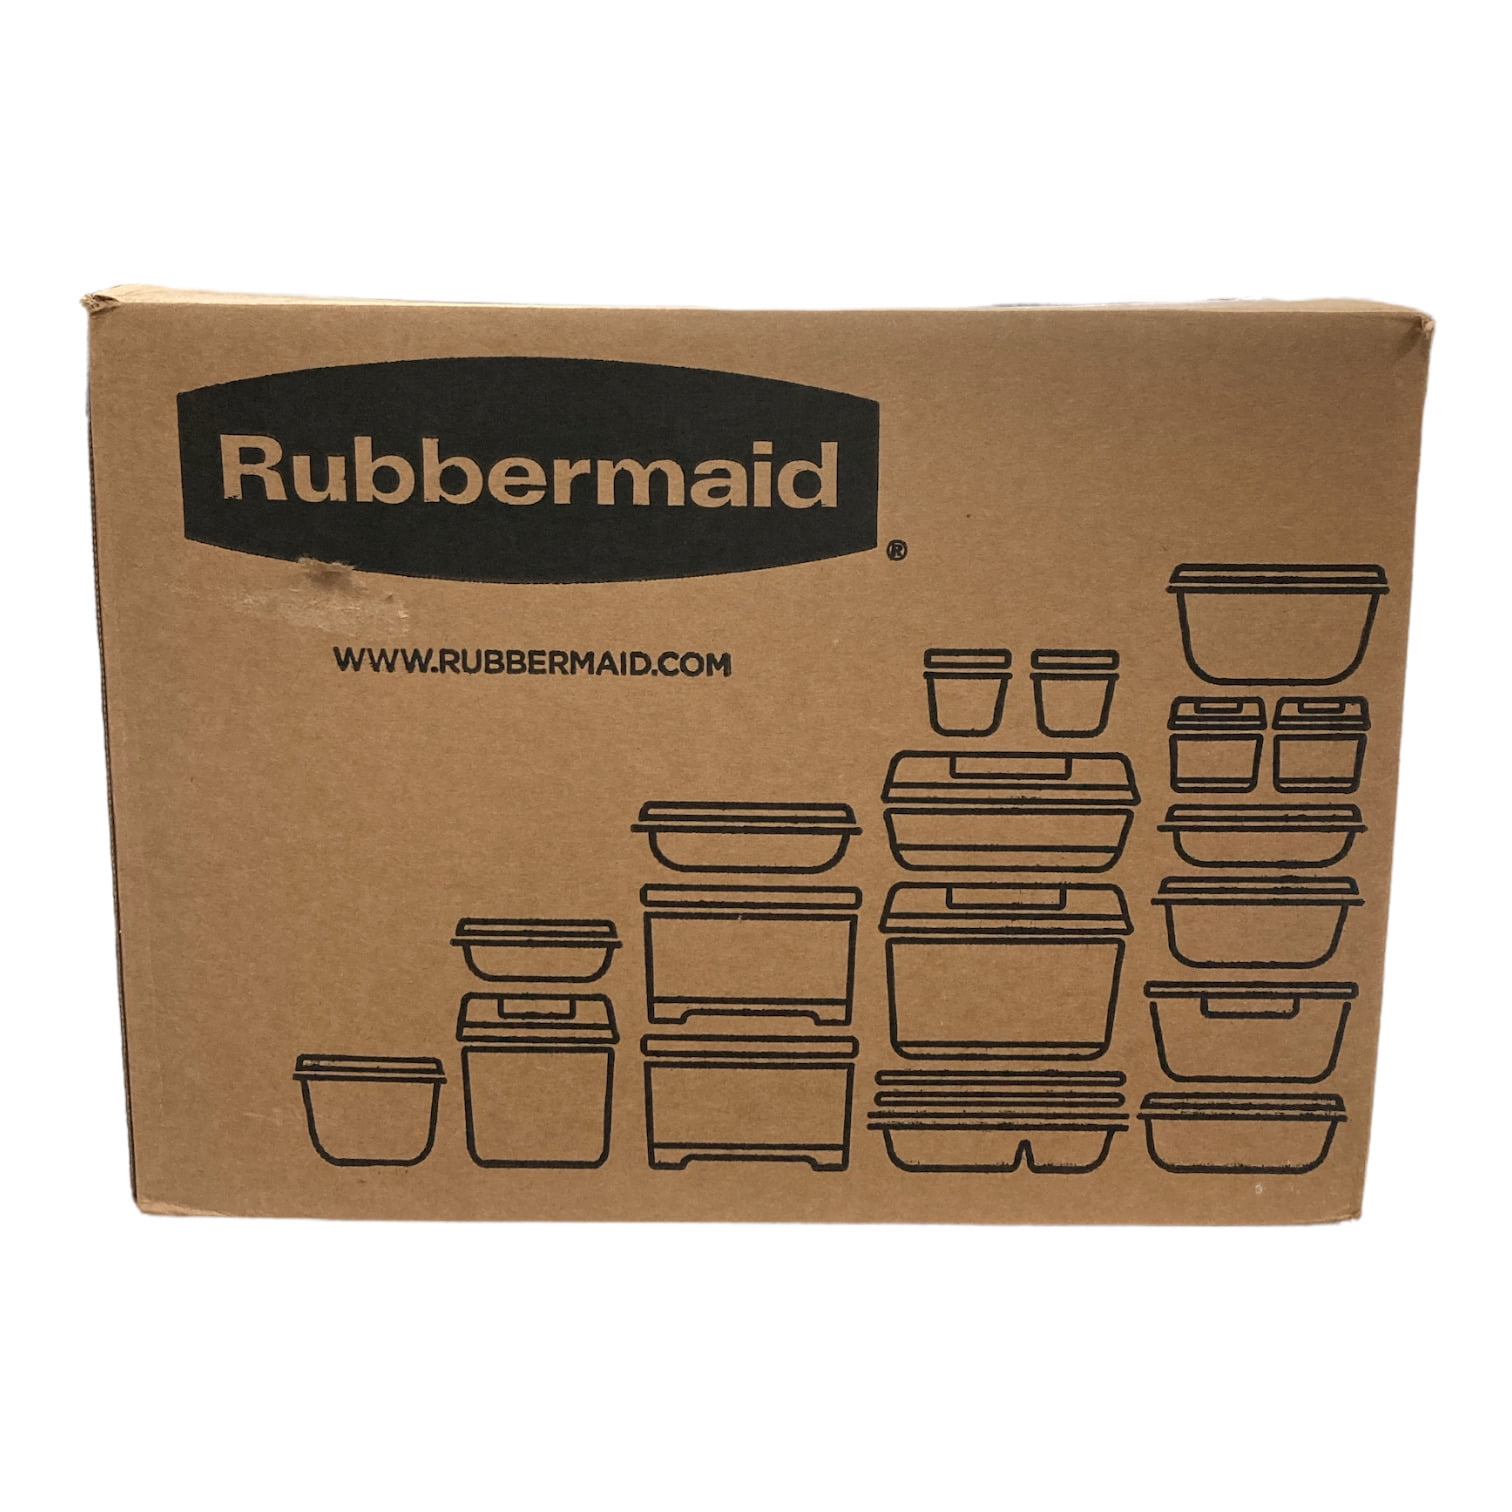 Rubbermaid Easy Find Lids 50-Piece Set Only $22.98 on SamsClub.com